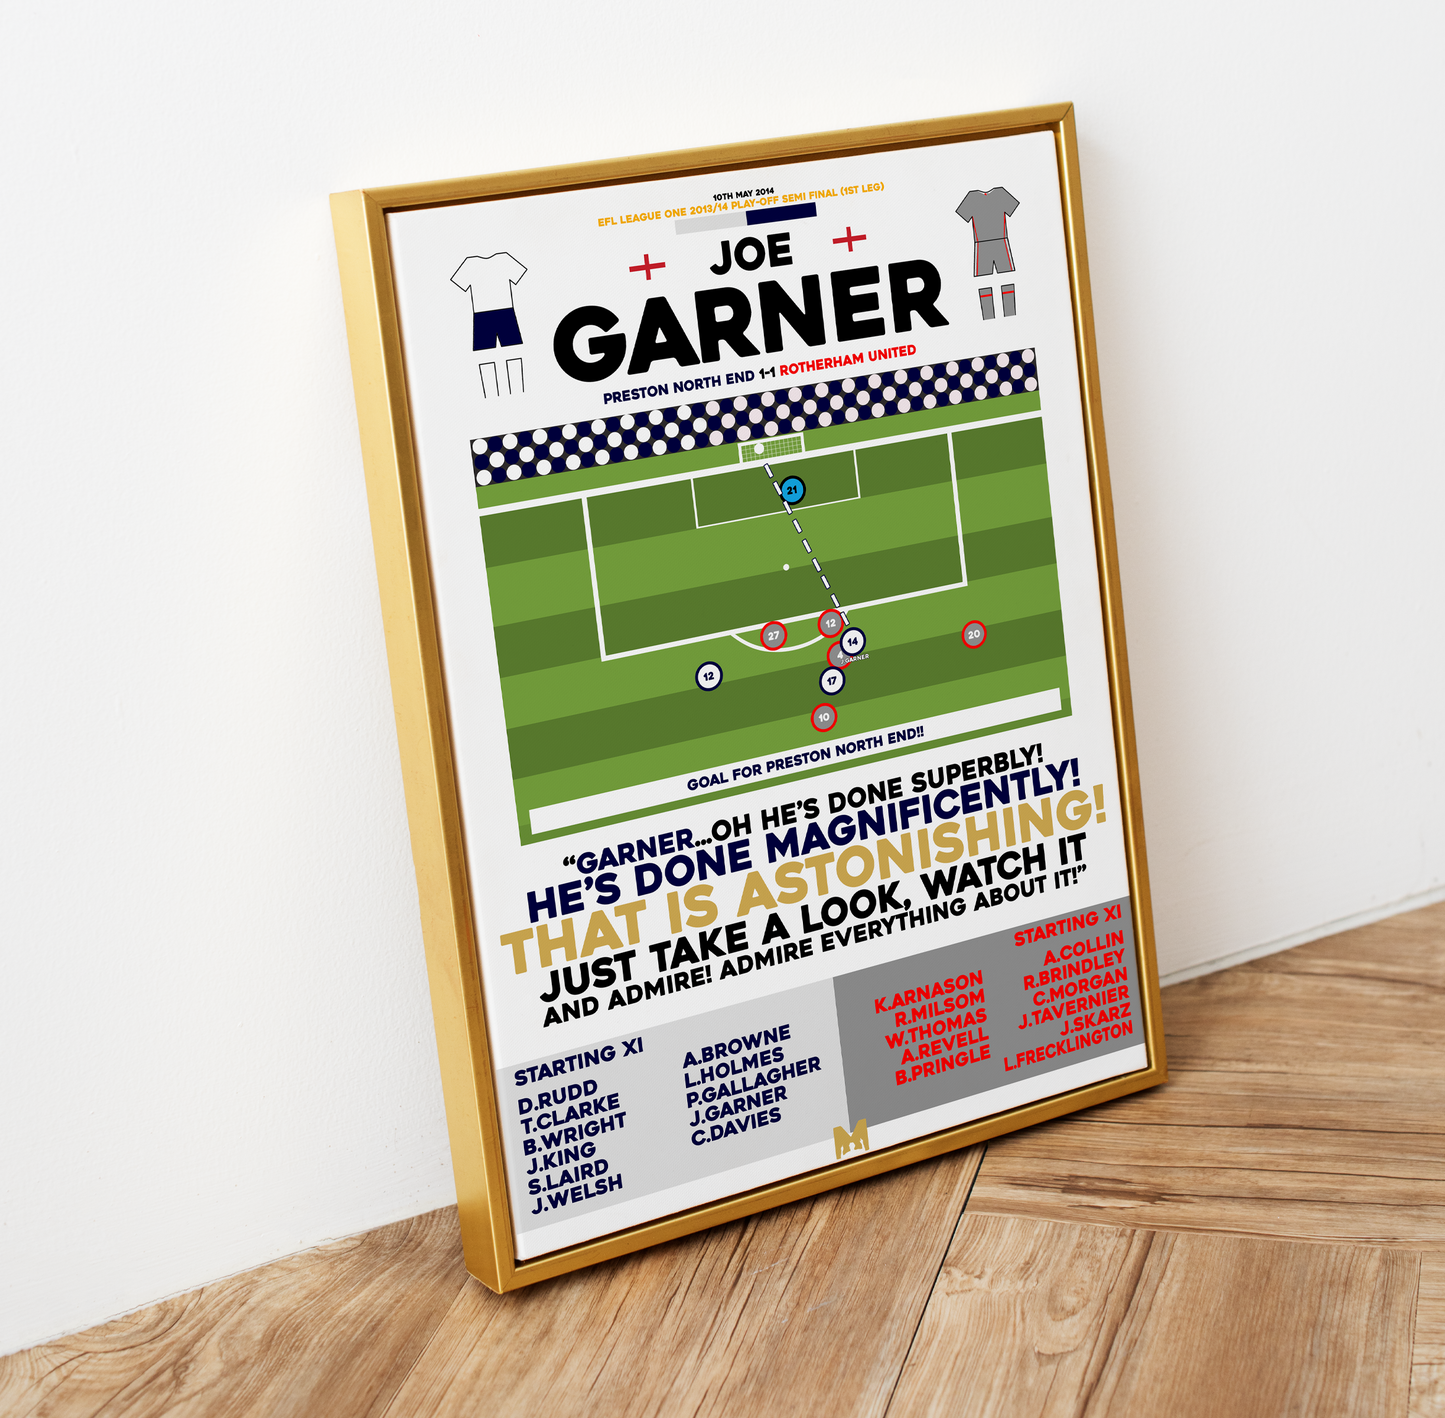 Joe Garner Goal vs Rotherham United - EFL League One 2013/14 - Preston North End